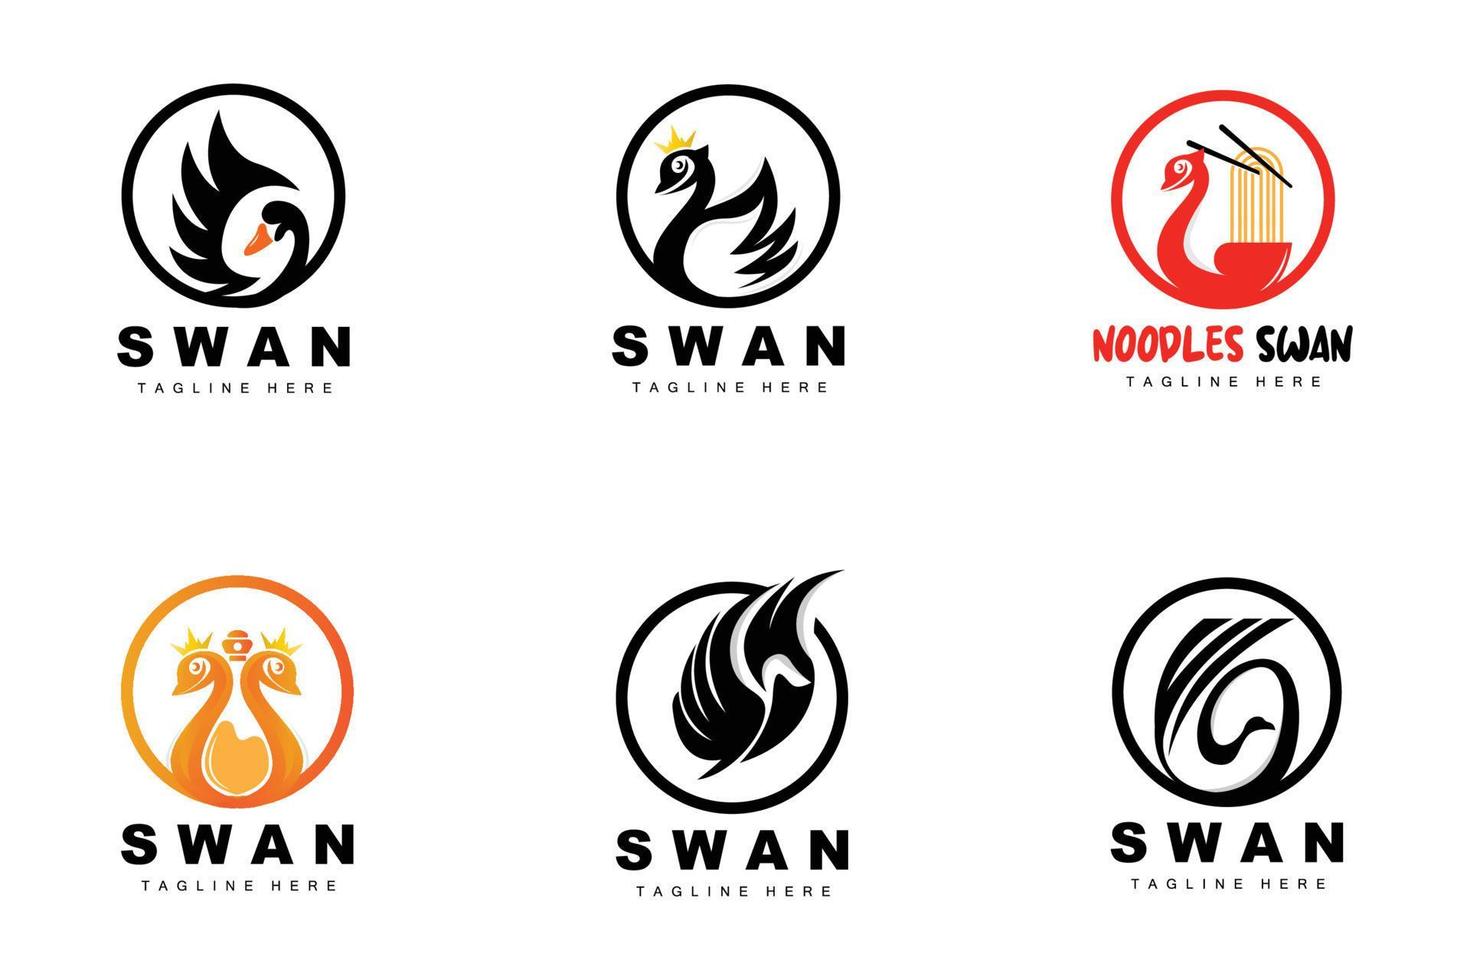 Schwan-Logo-Design, Ententierillustration, Firmenmarken-Vorlagenvektor vektor